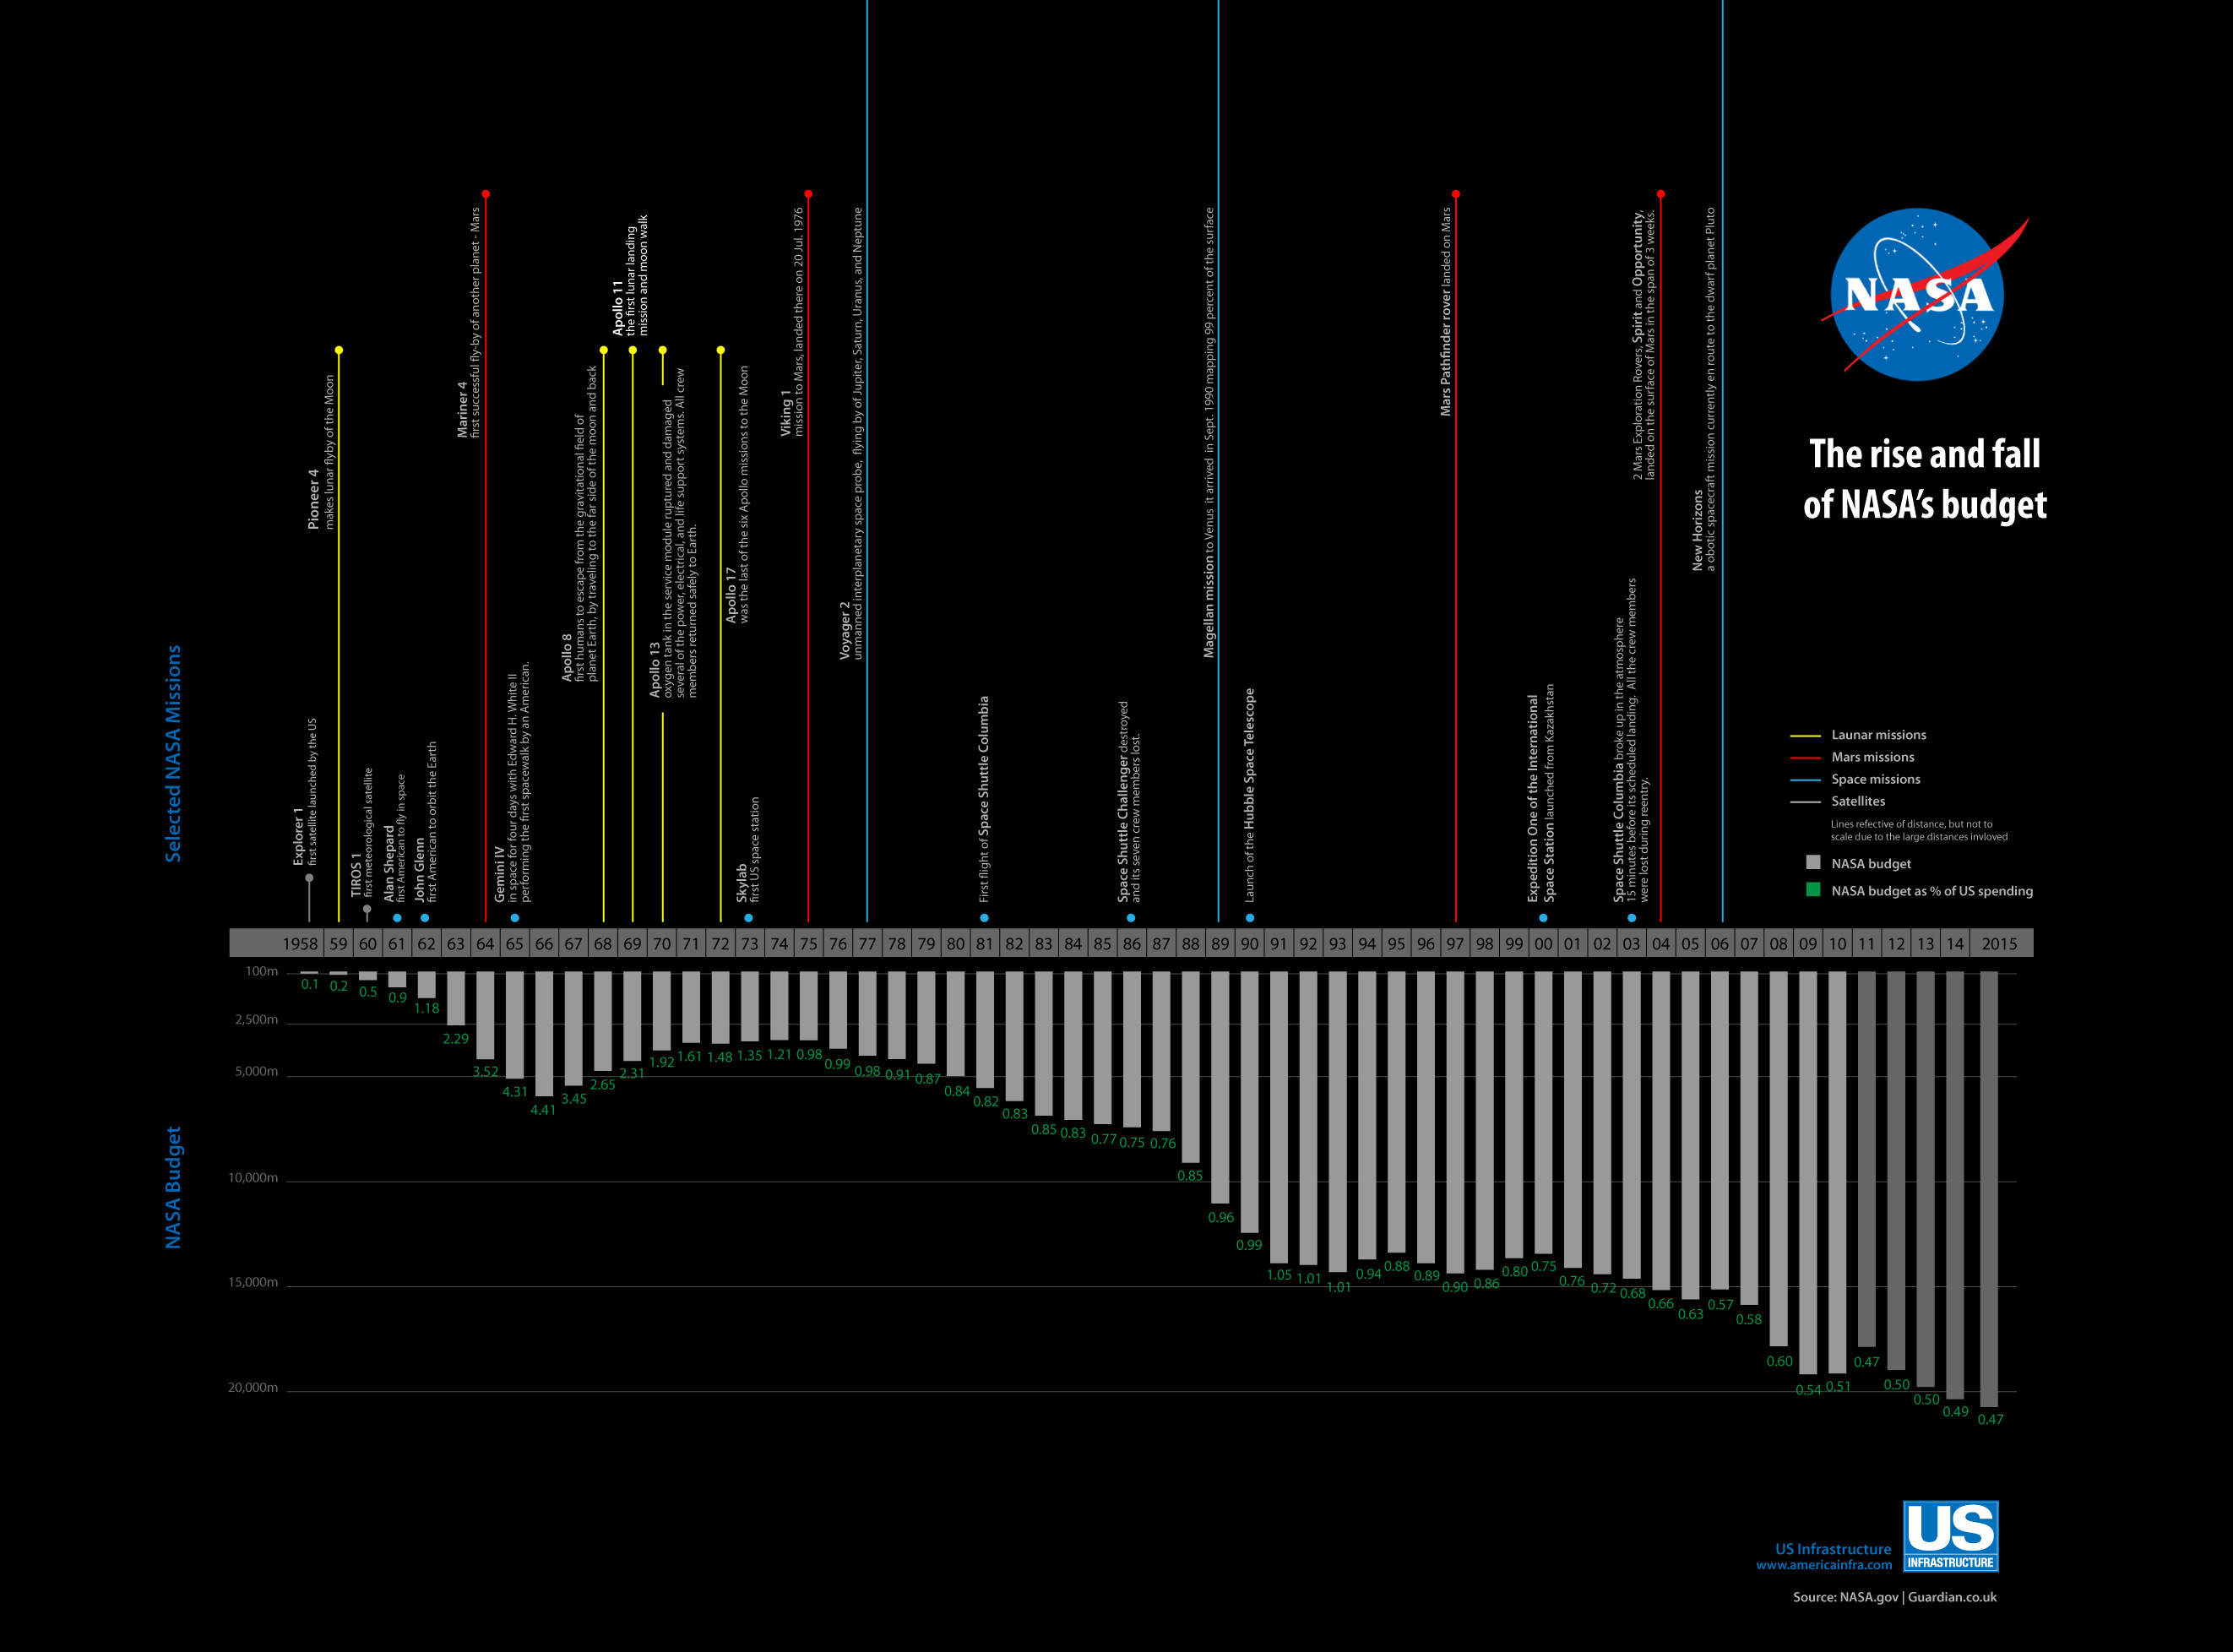 The rise and fall of NASA’s budget Visual.ly